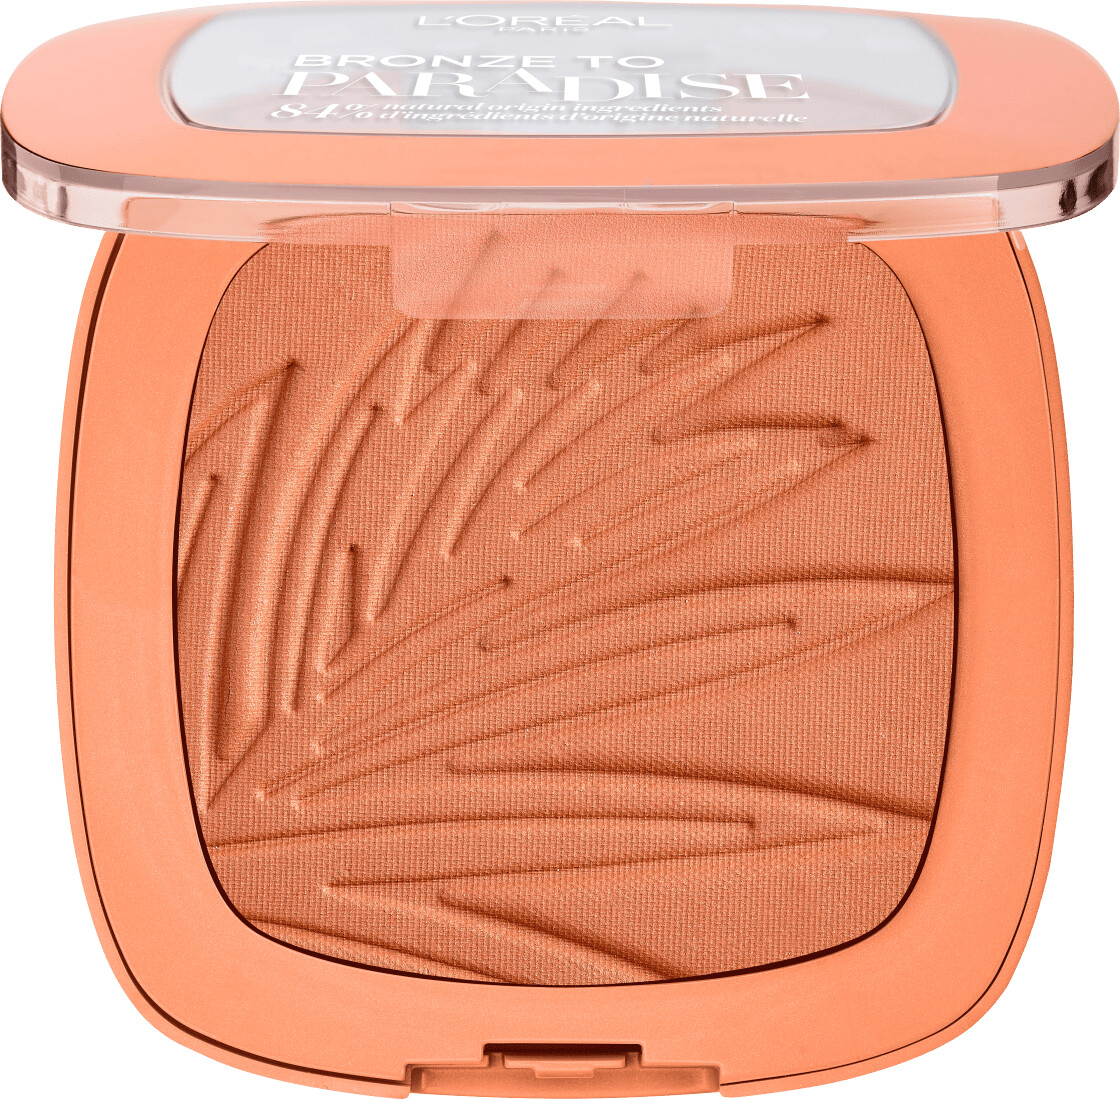 Photos - Face Powder / Blush LOreal L'Oréal Bronze to Paradise Gentle Matte Bronzing Powder 02 (9g) 